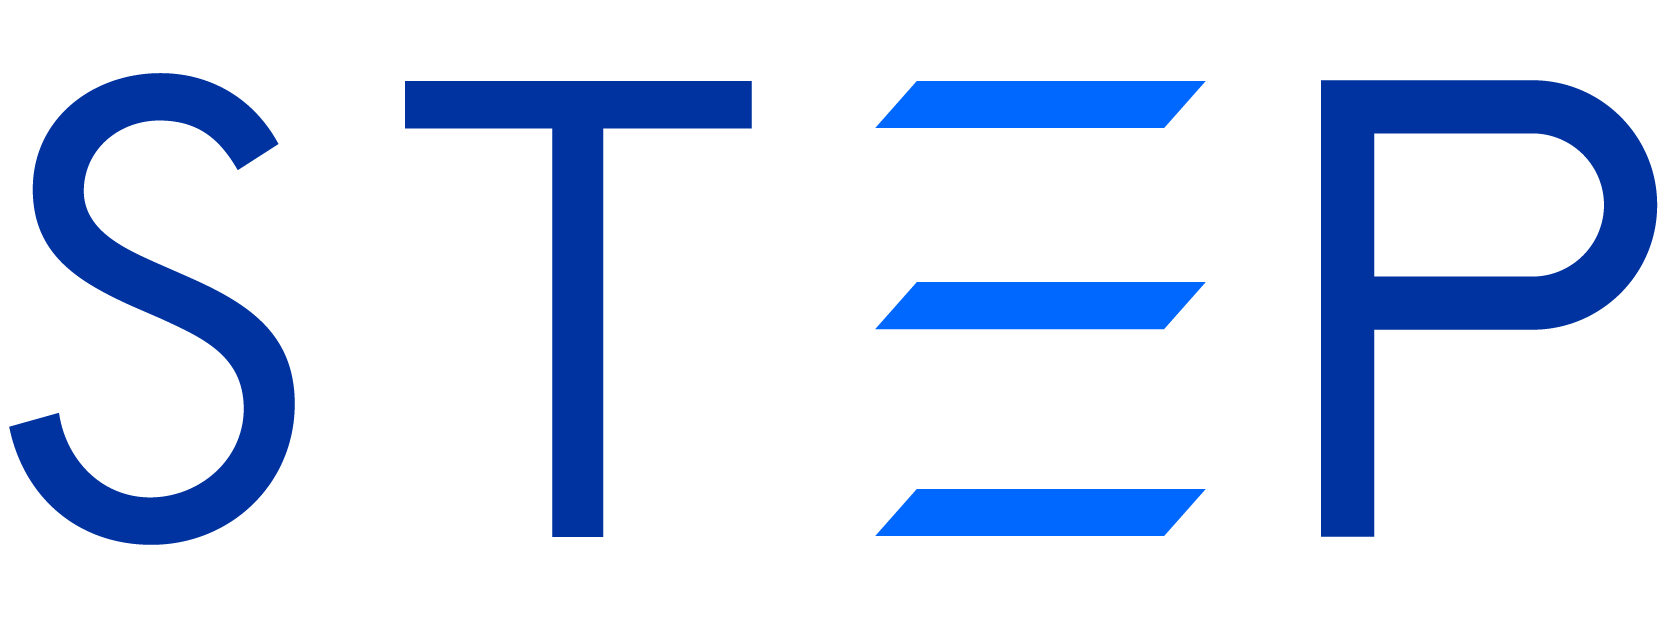 STEP CG Company Logo